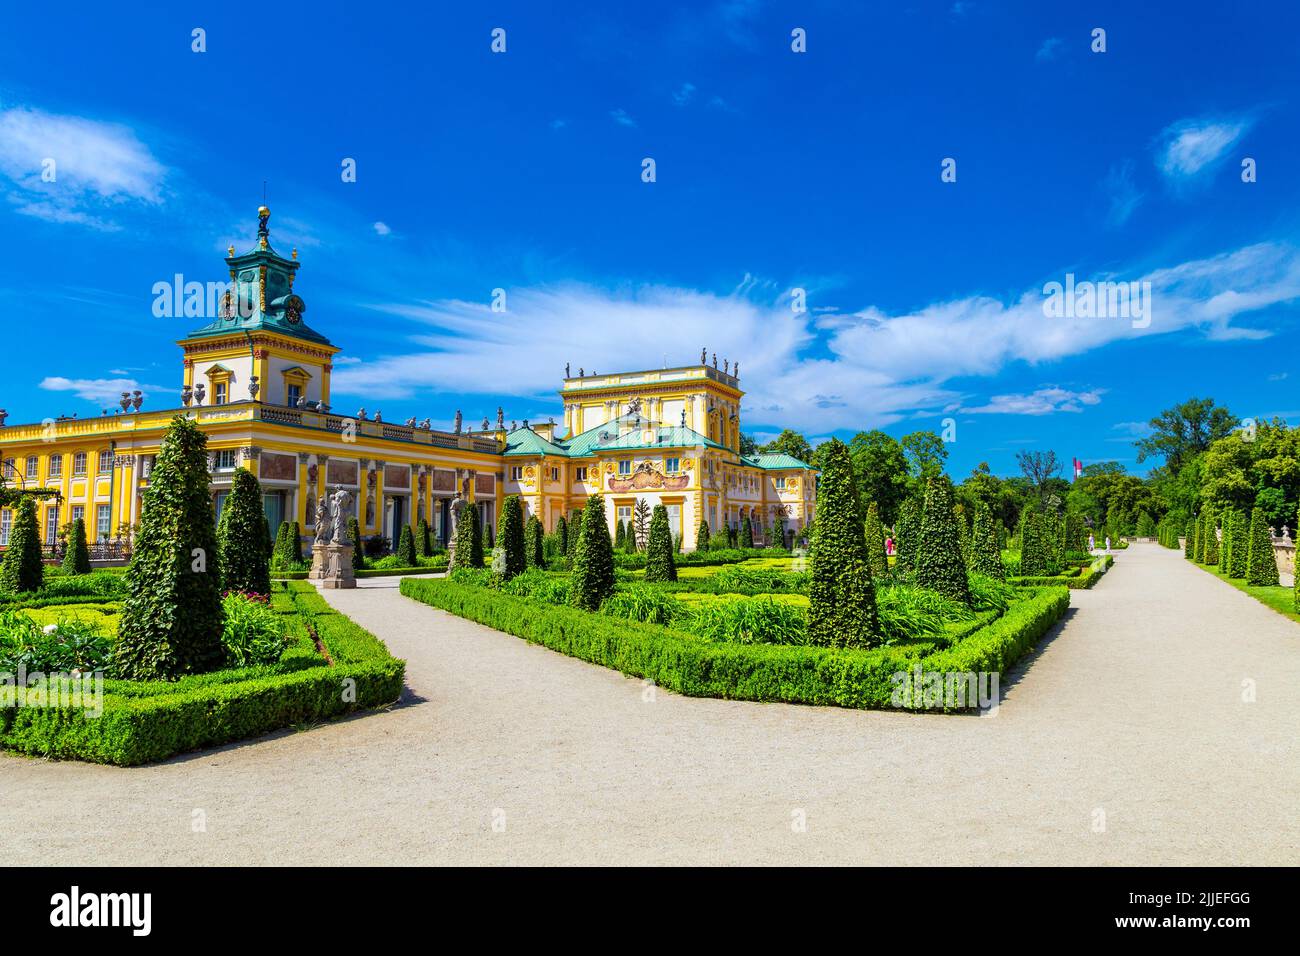 Giardino topiario e ornato giallo esterno in stile italiano 17th secolo barocco Royal Wilanow Palace, Varsavia, Polonia Foto Stock